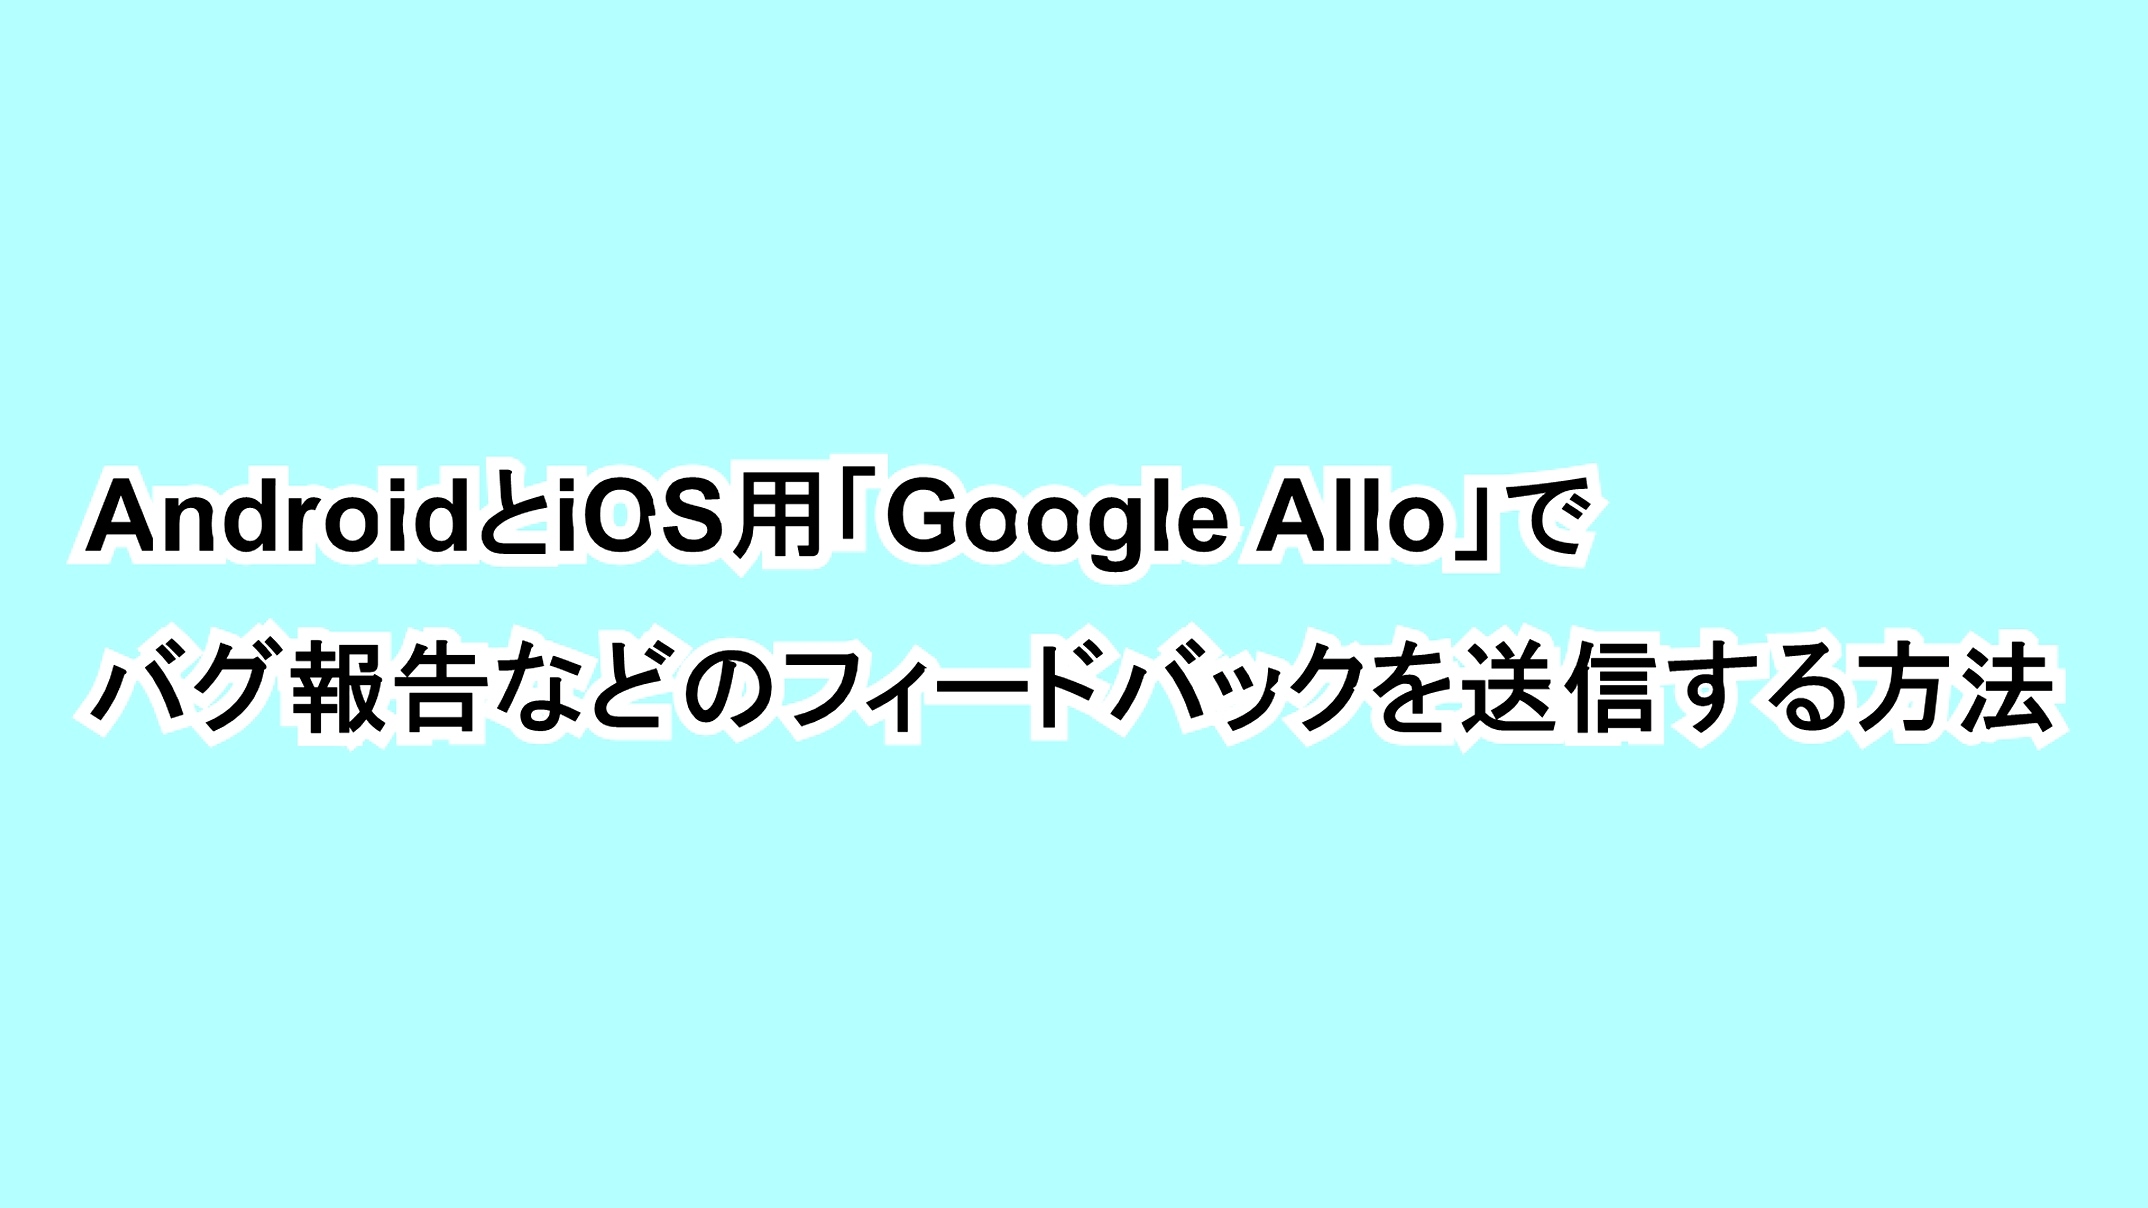 AndroidとiOS用「Google Allo」のバグ報告などのフィードバックを送信する方法